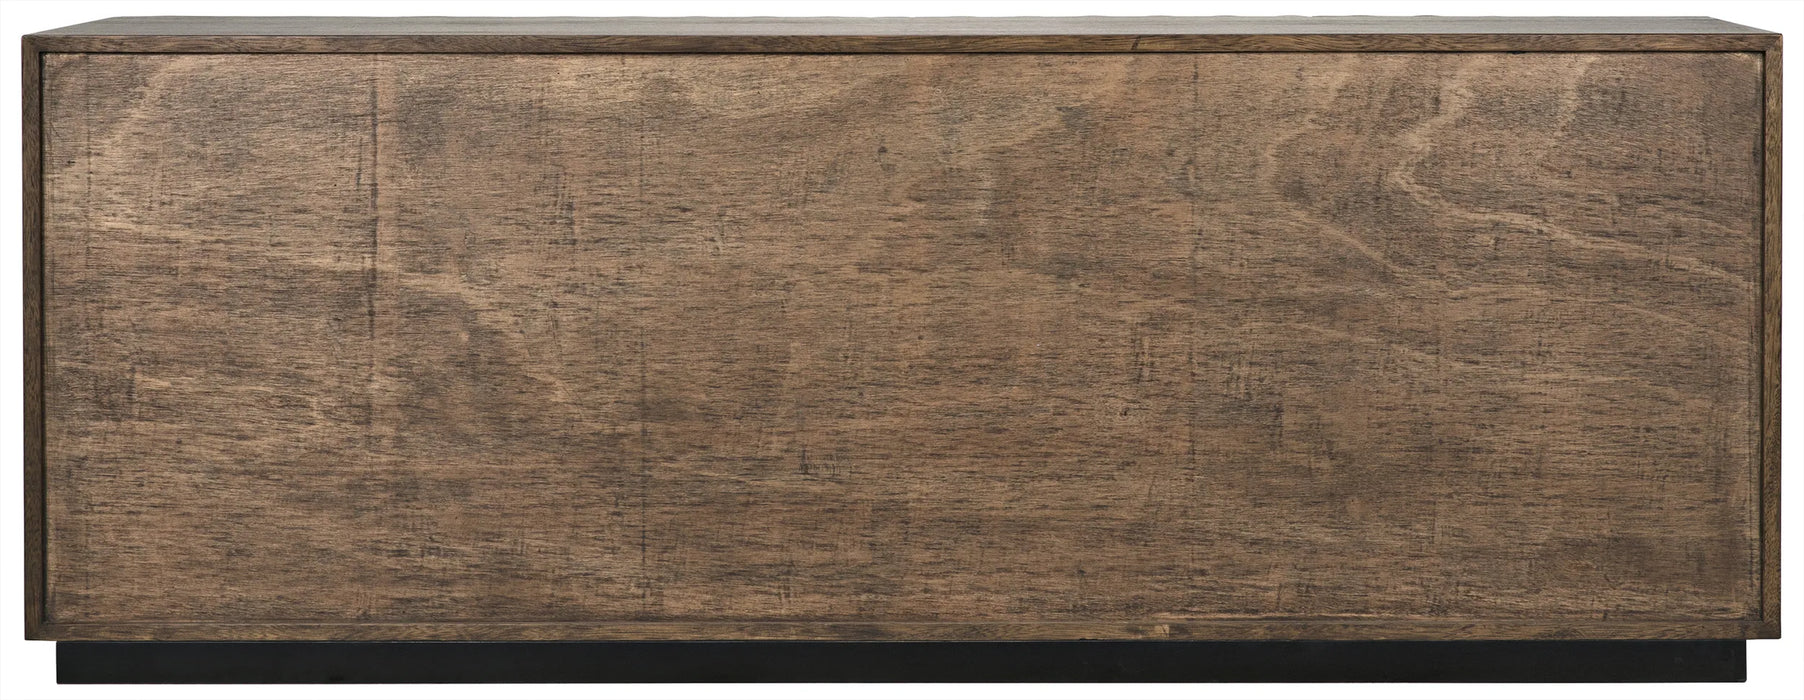 NOIR Furniture - Alameda Sideboard, Large, Dark Walnut - GCON295DW